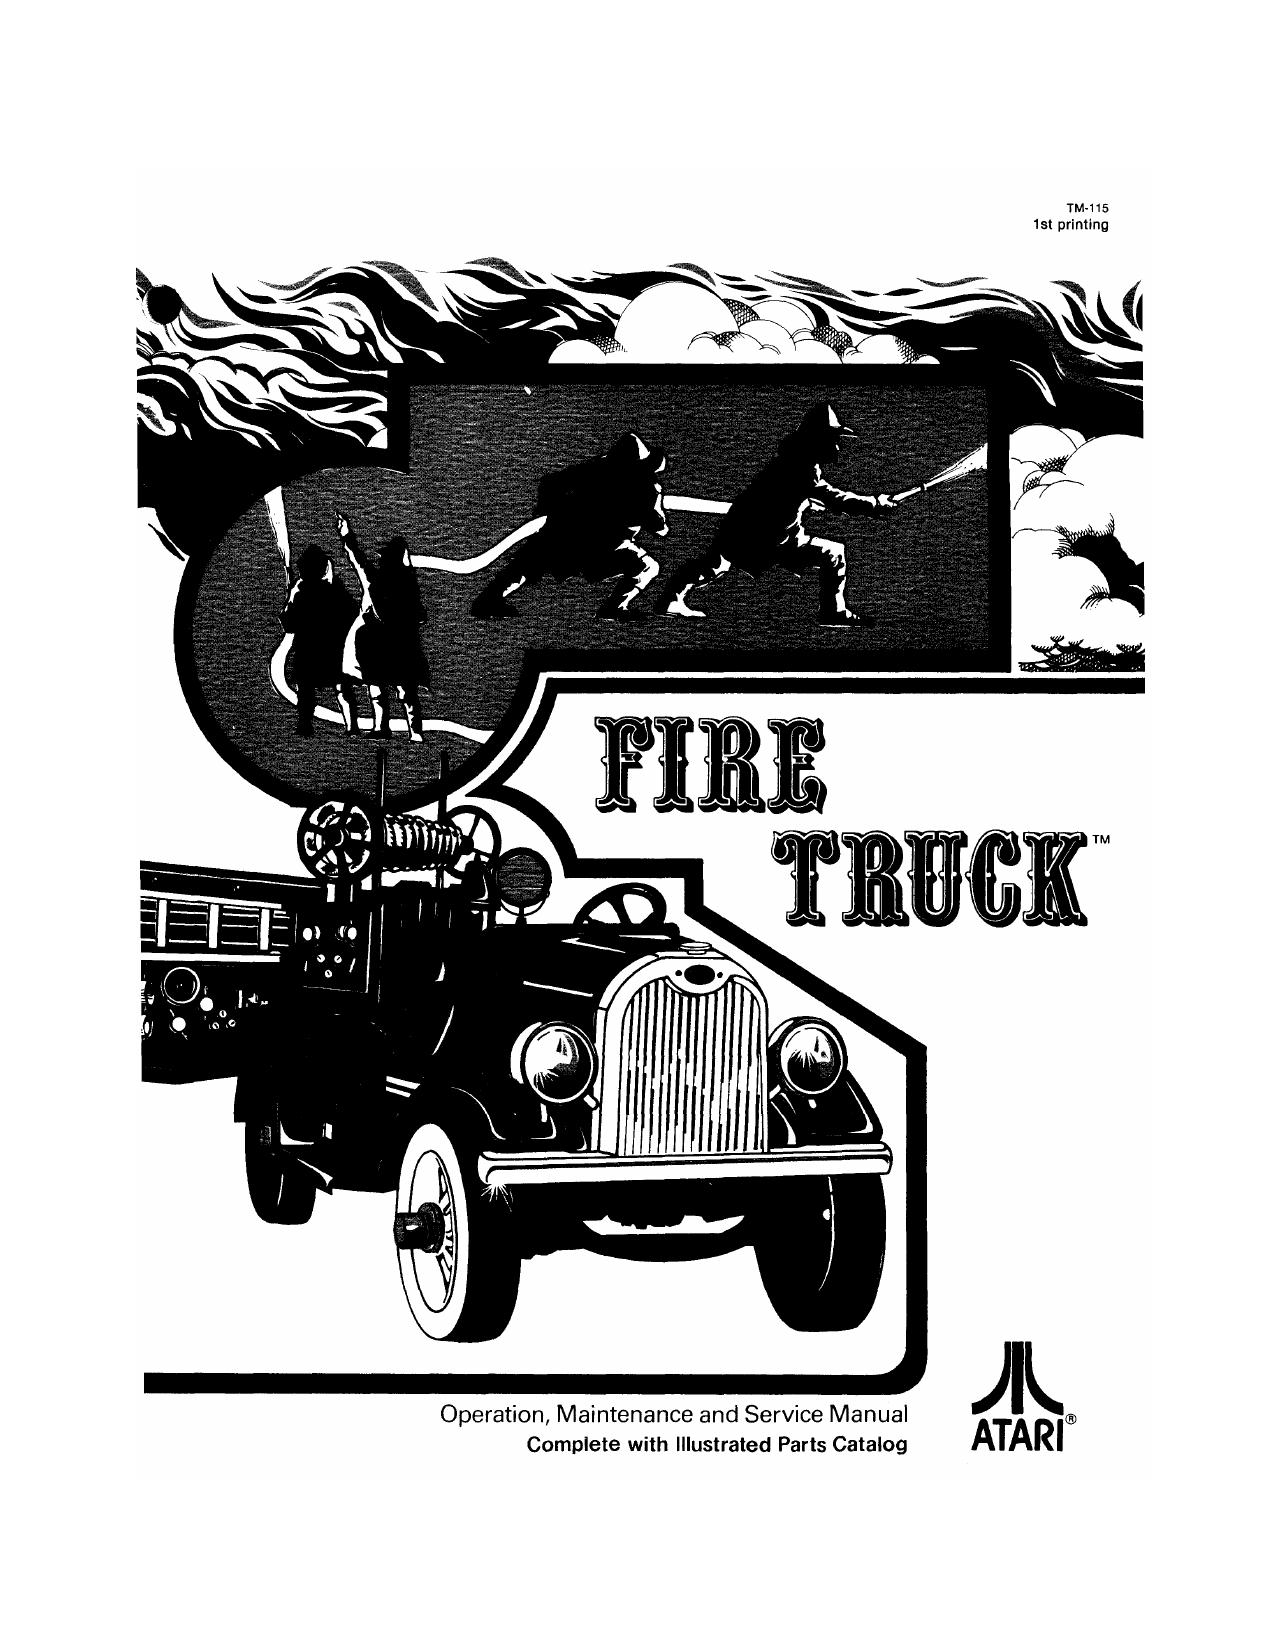 FireTruck Manual